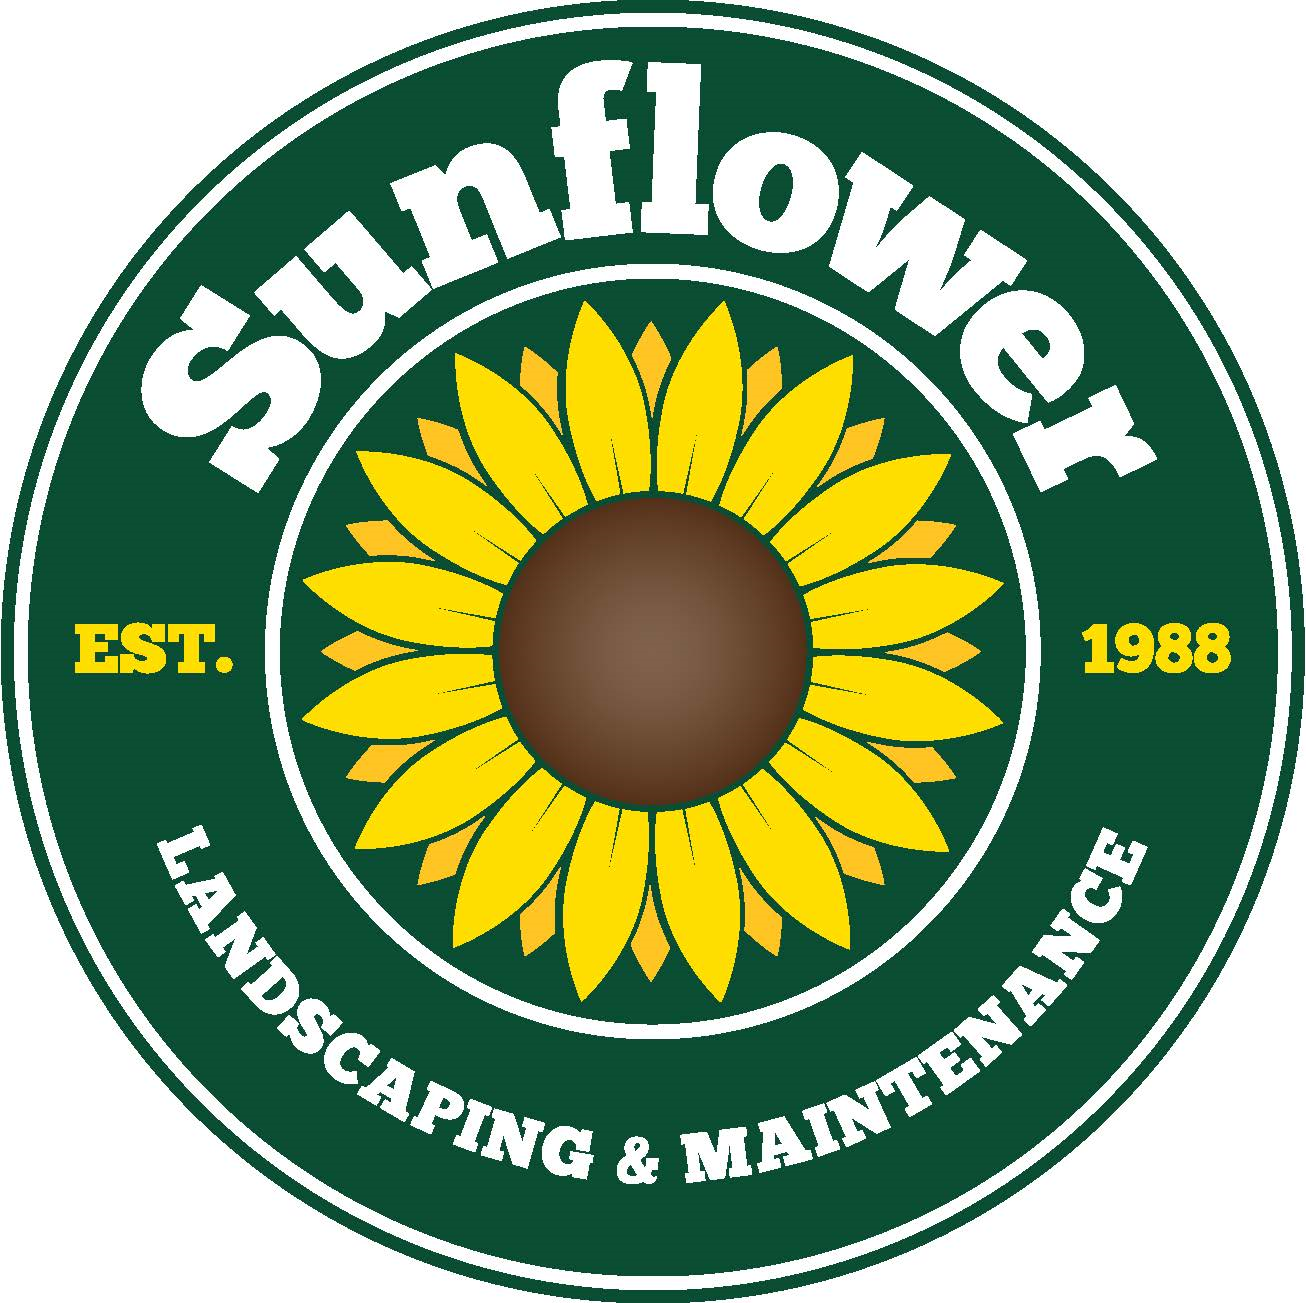 Sunflower Maintenance & Landscaping 